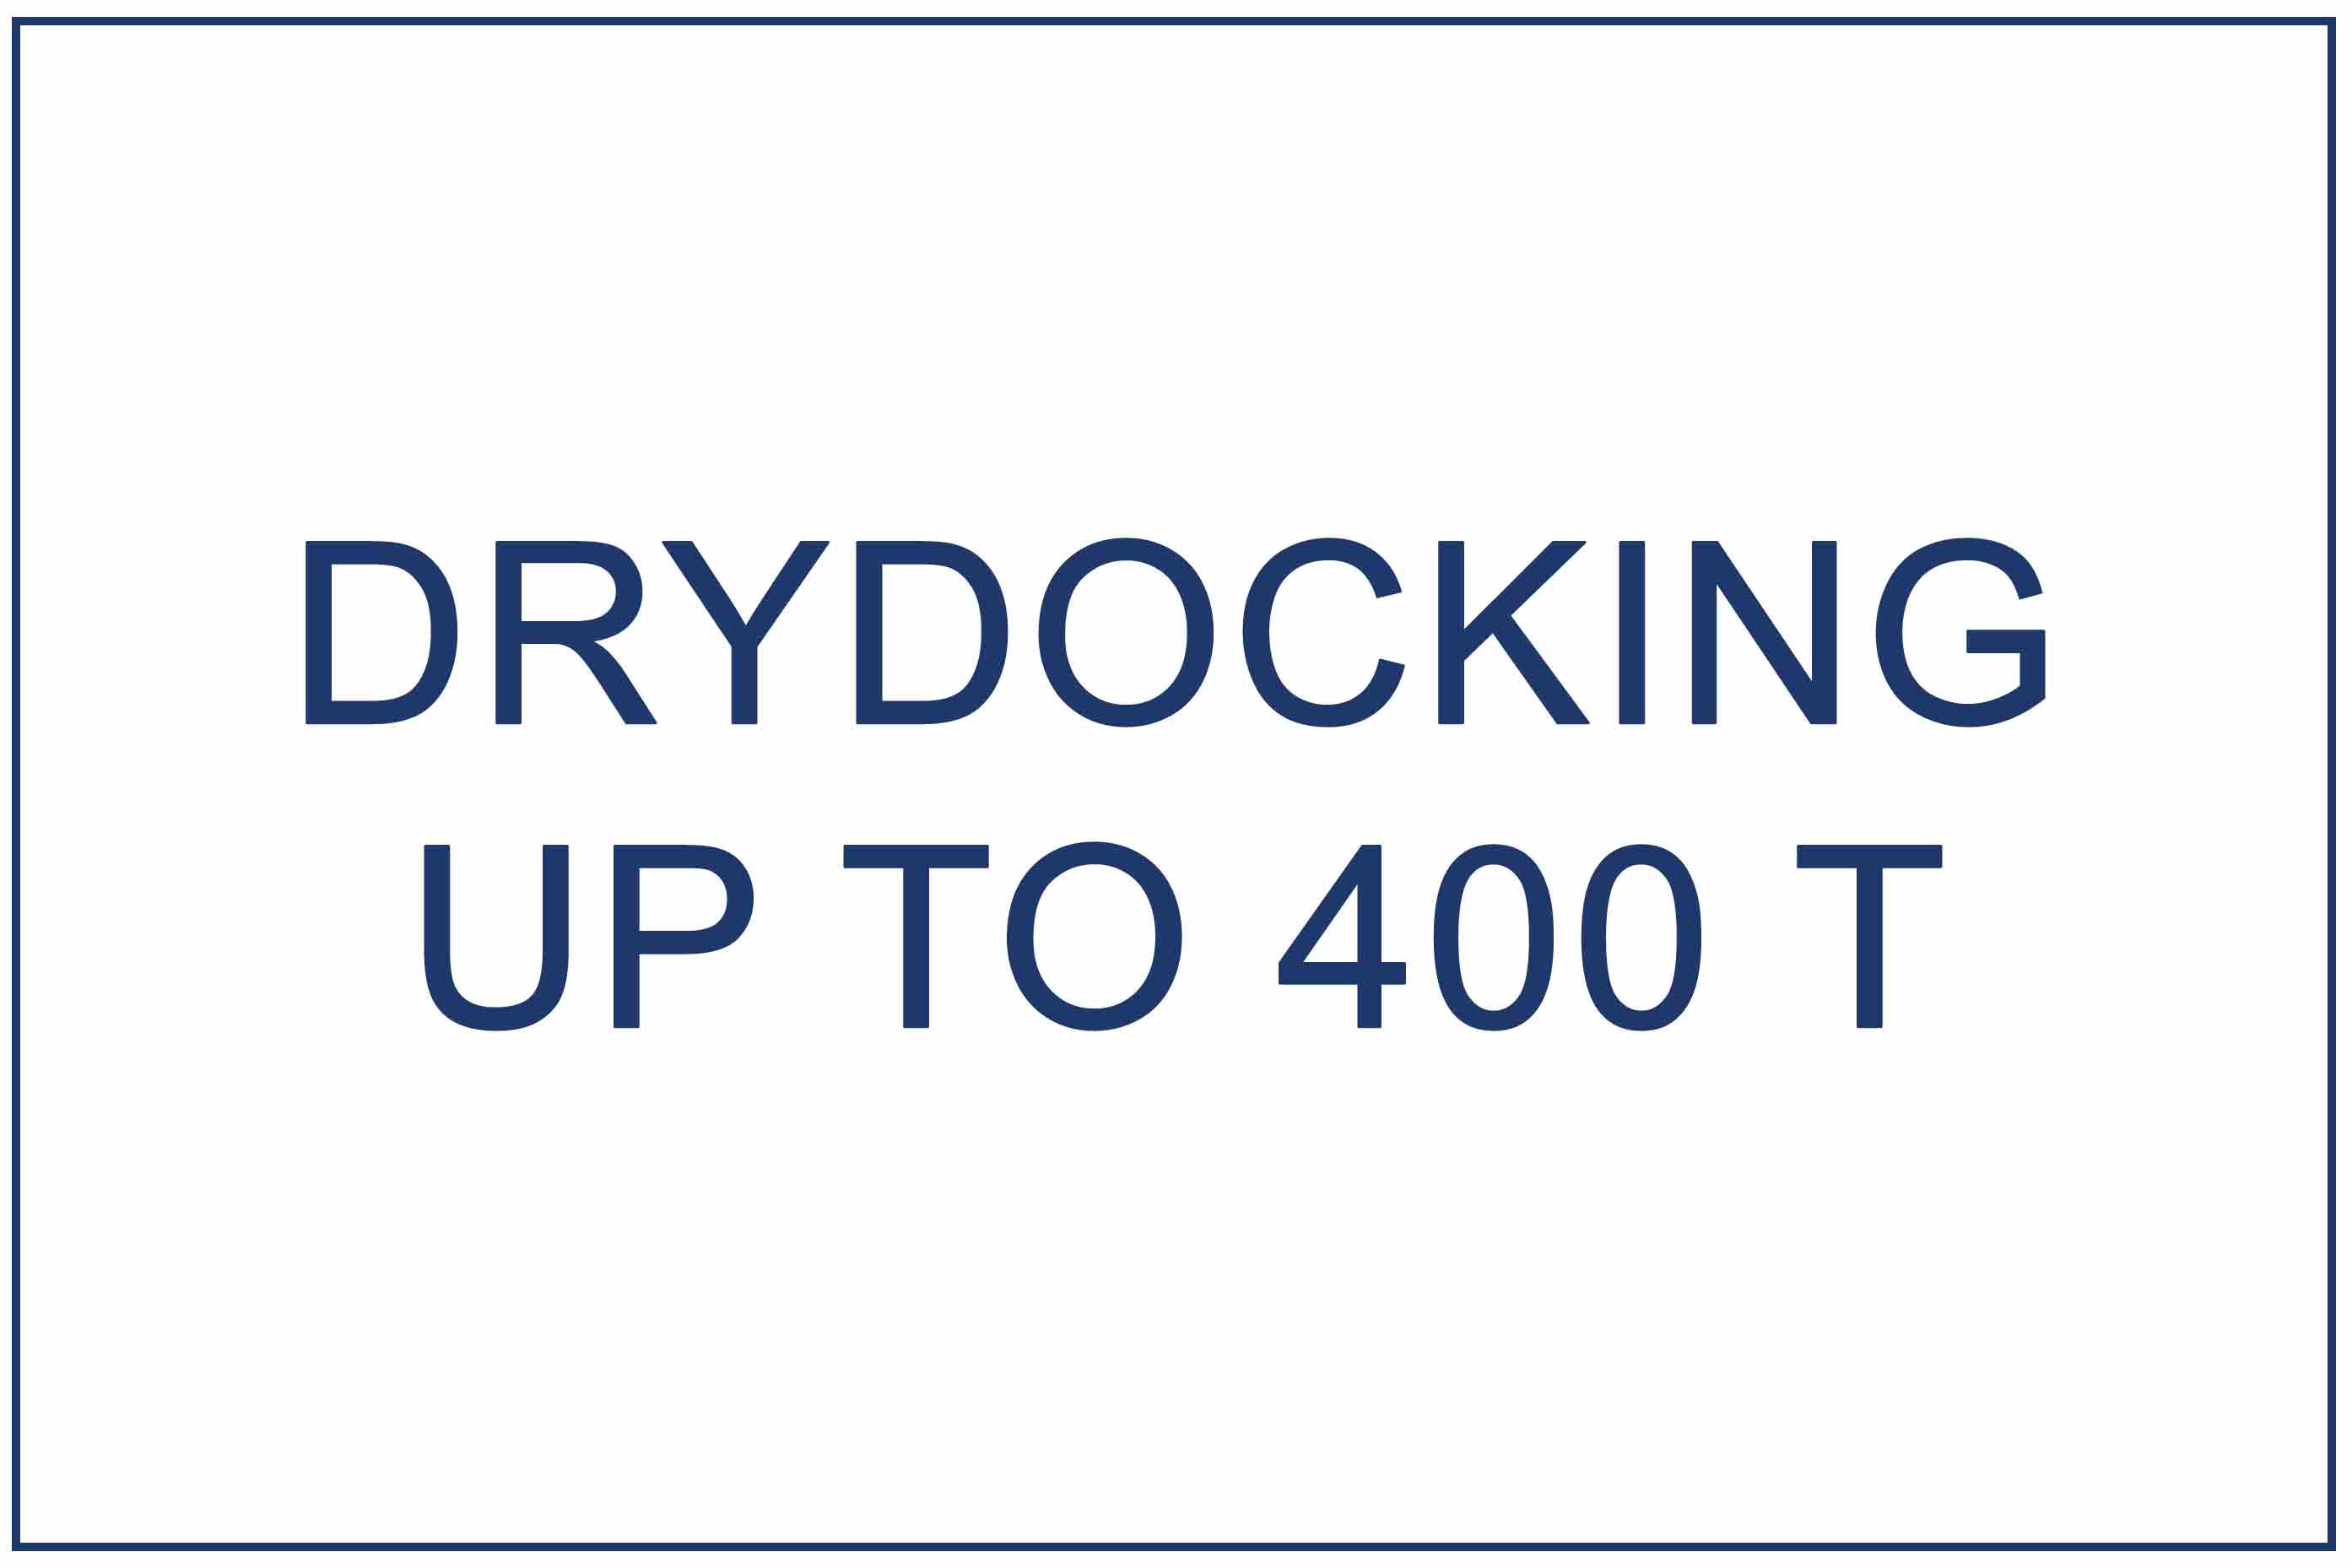 Drydocking up to 400 T